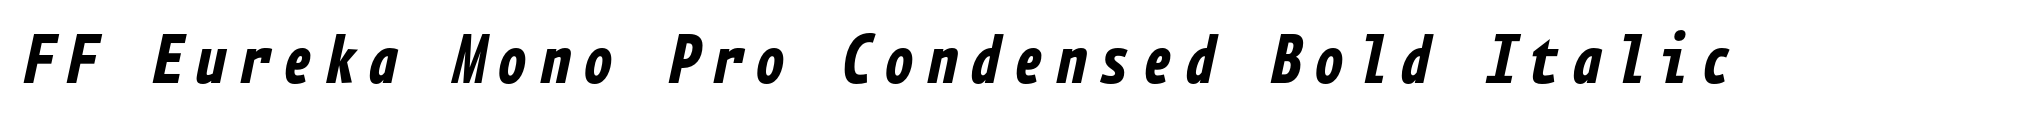 FF Eureka Mono Pro Condensed Bold Italic image